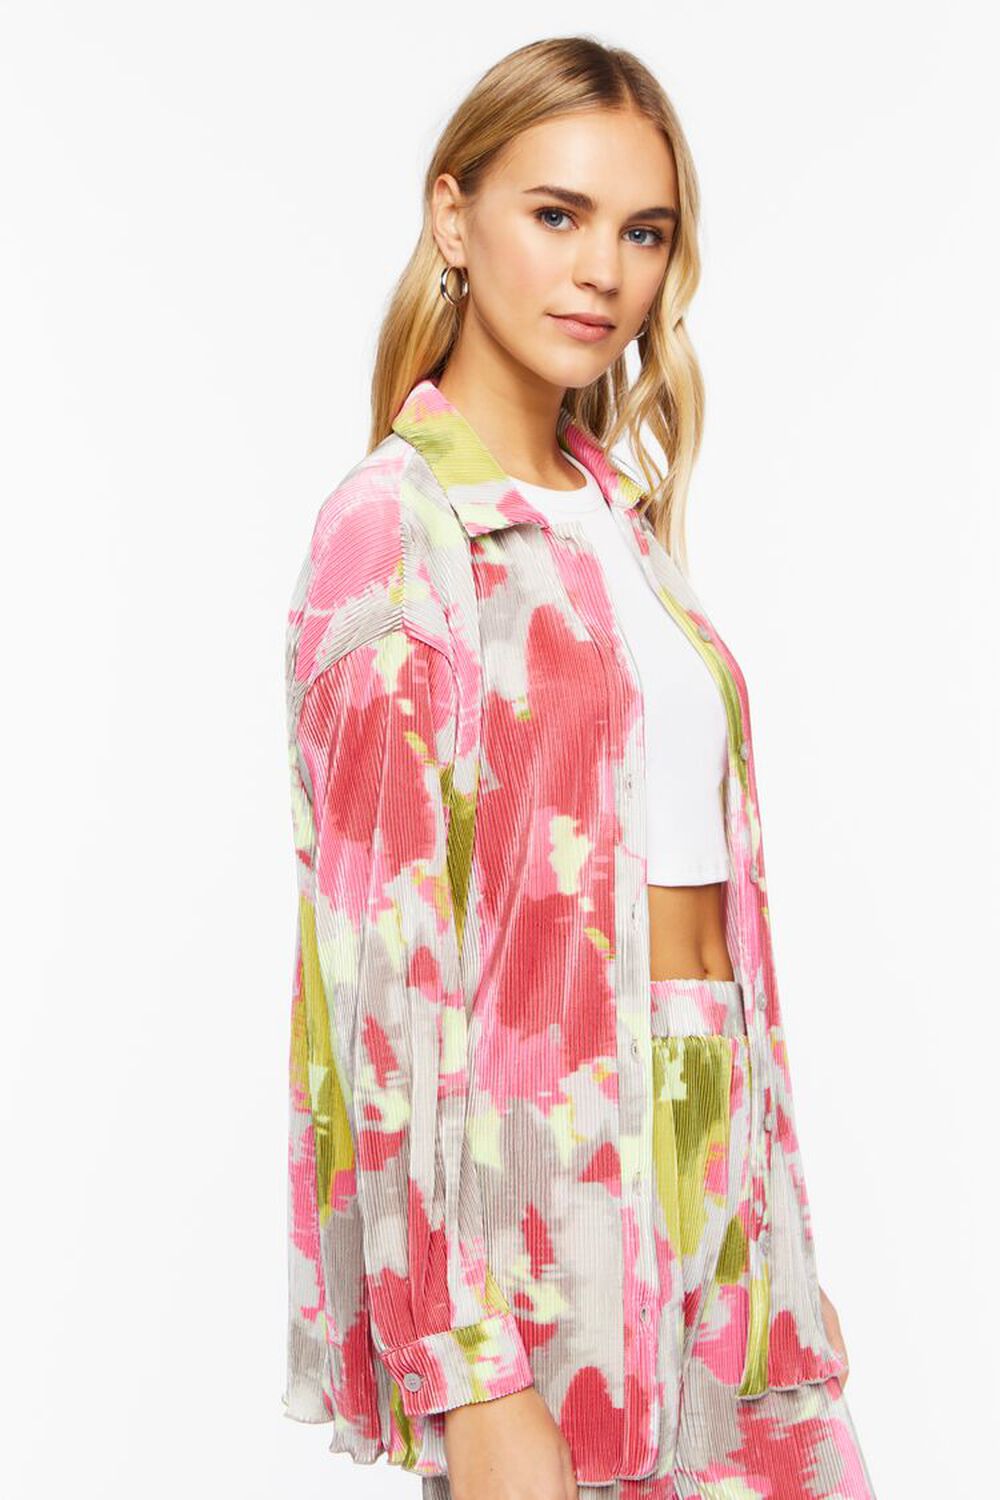 PEONY/MULTI Watercolor Floral Plisse Shirt, image 2